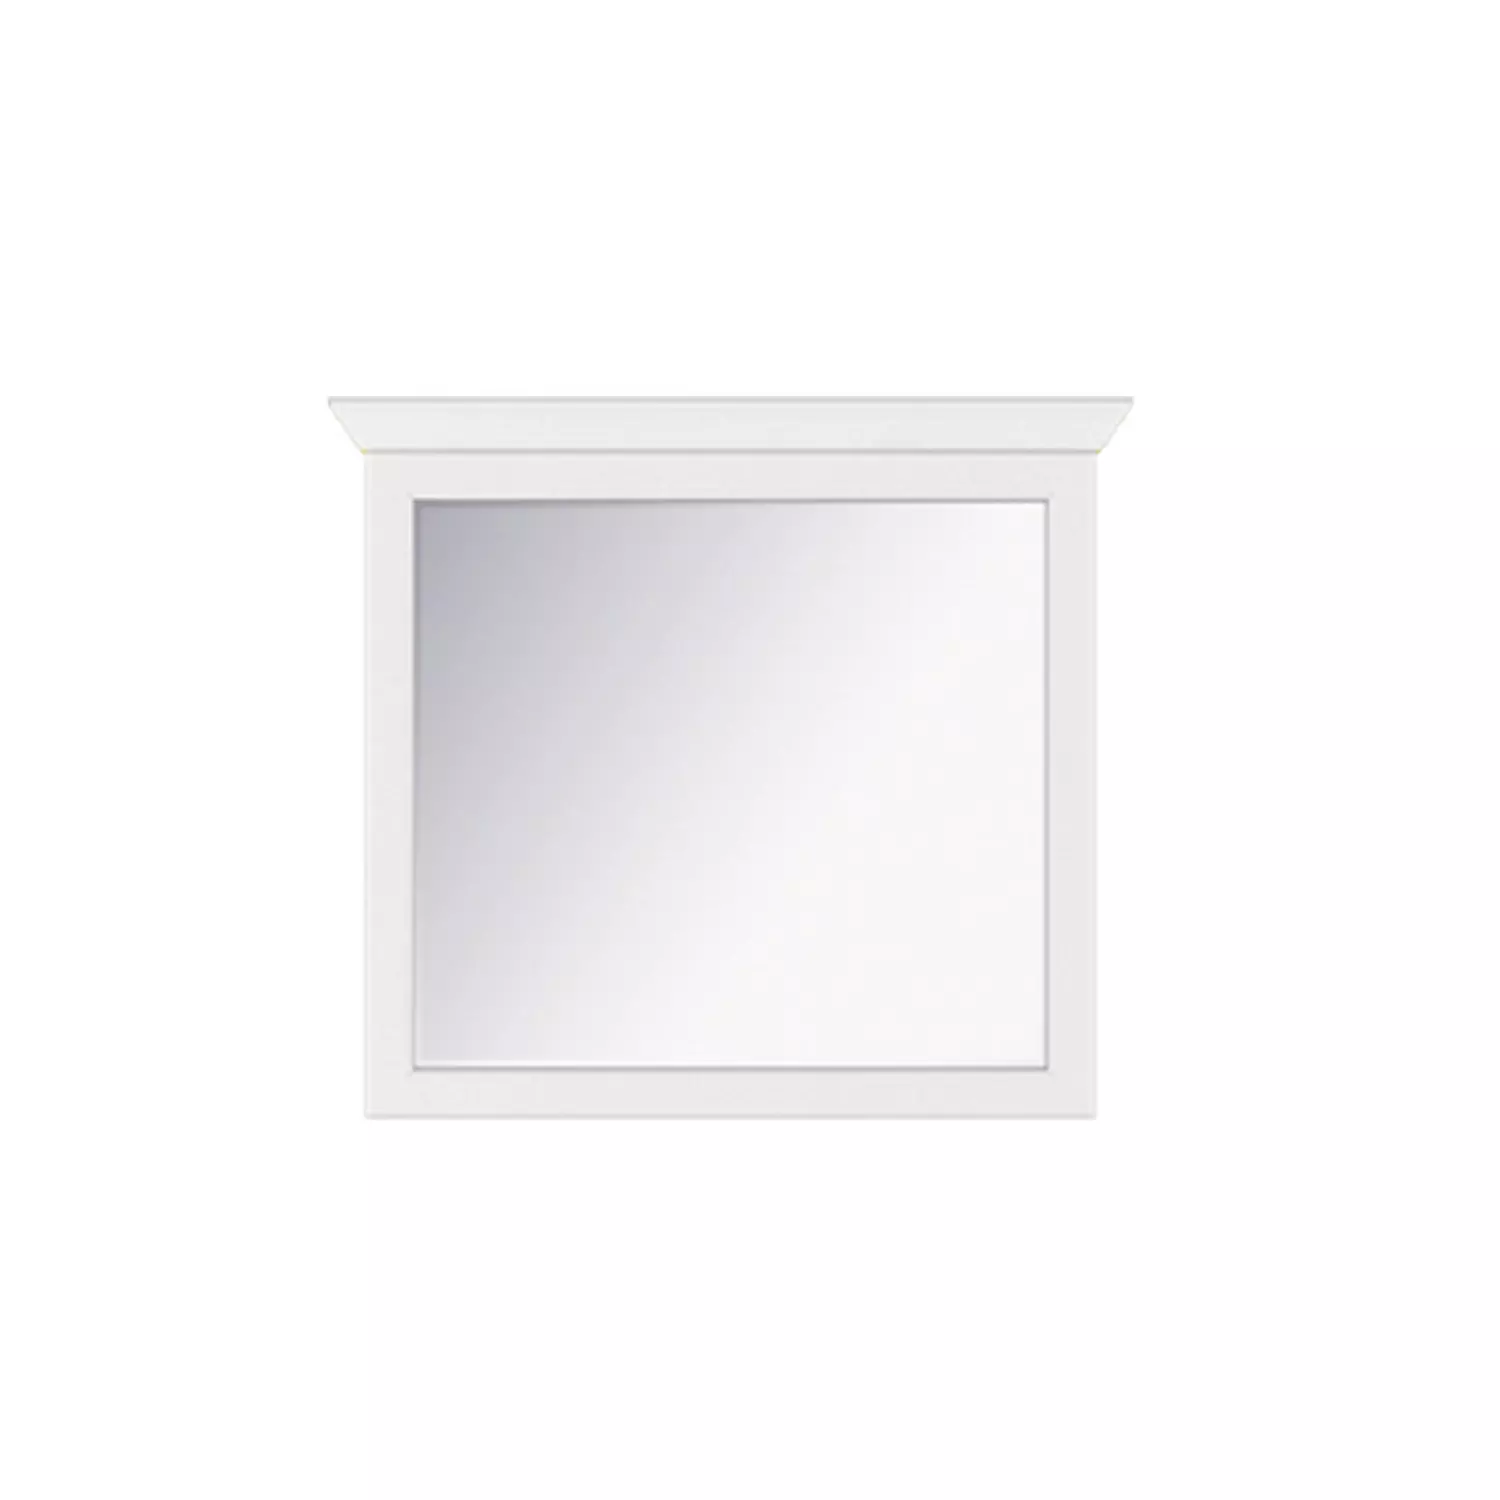 KLEO 001-1 tükör fehér